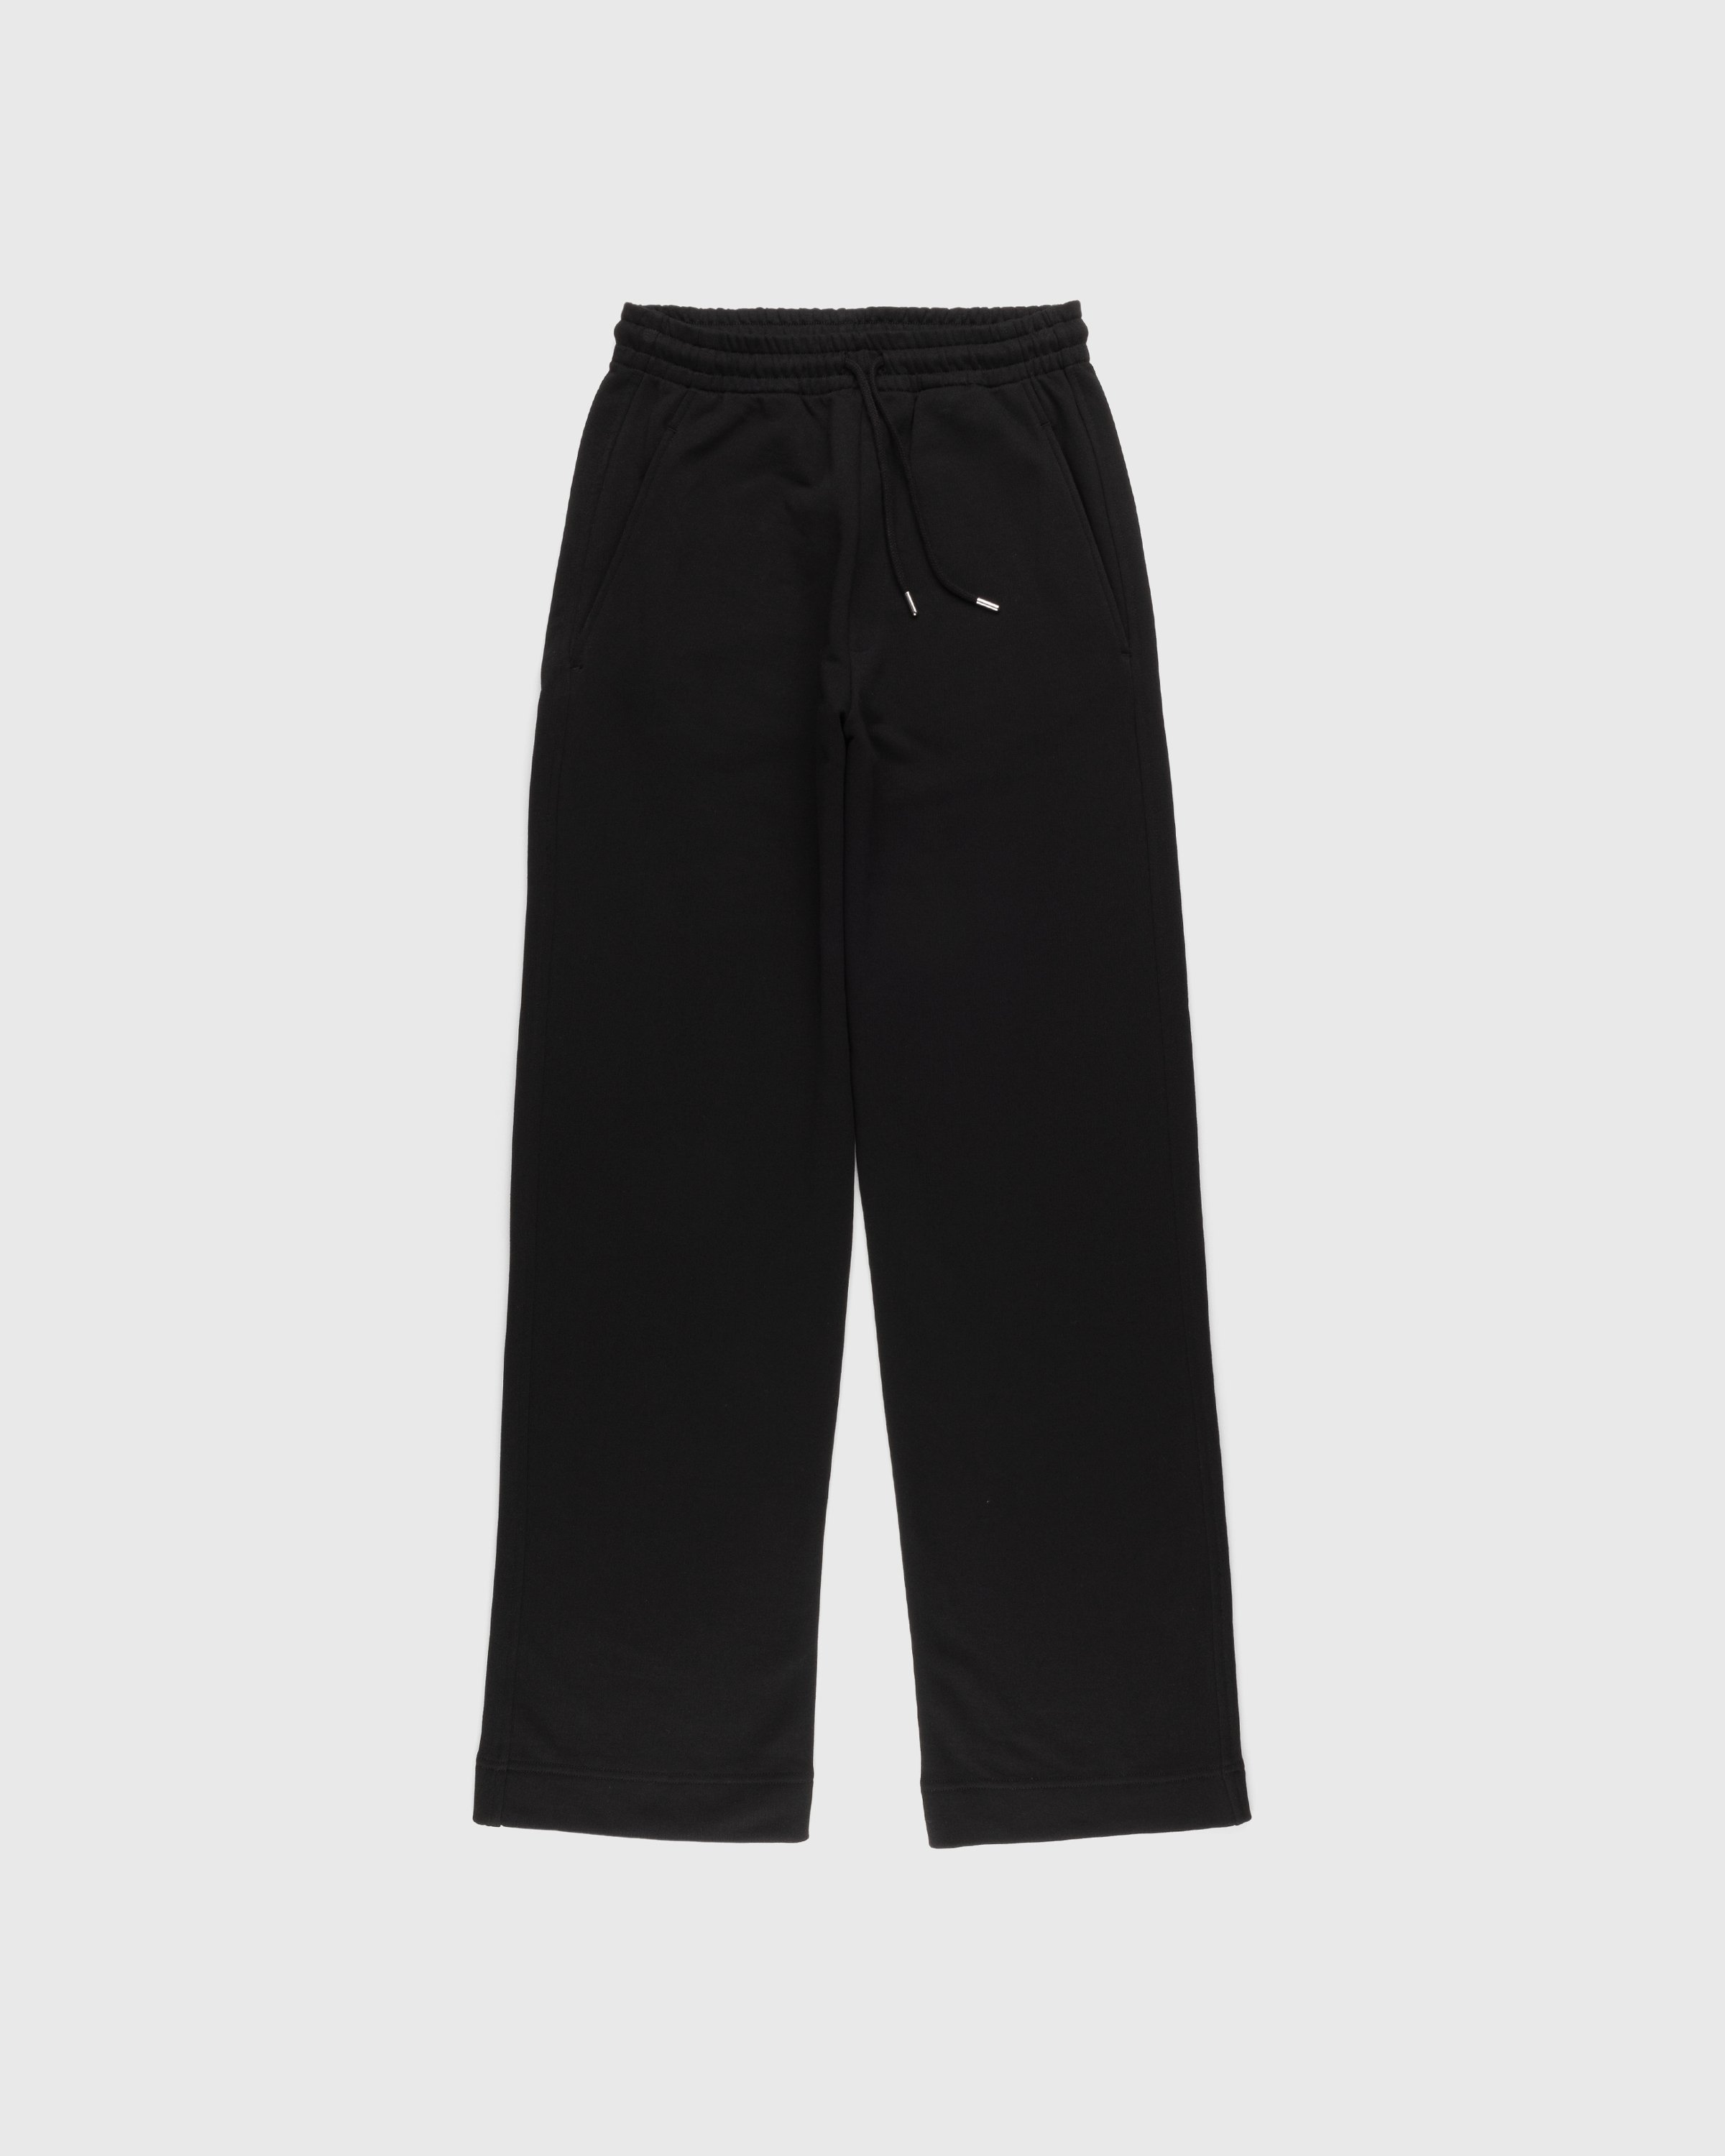 Dries van Noten - Hamer Sweatpants Black - Clothing - Black - Image 1